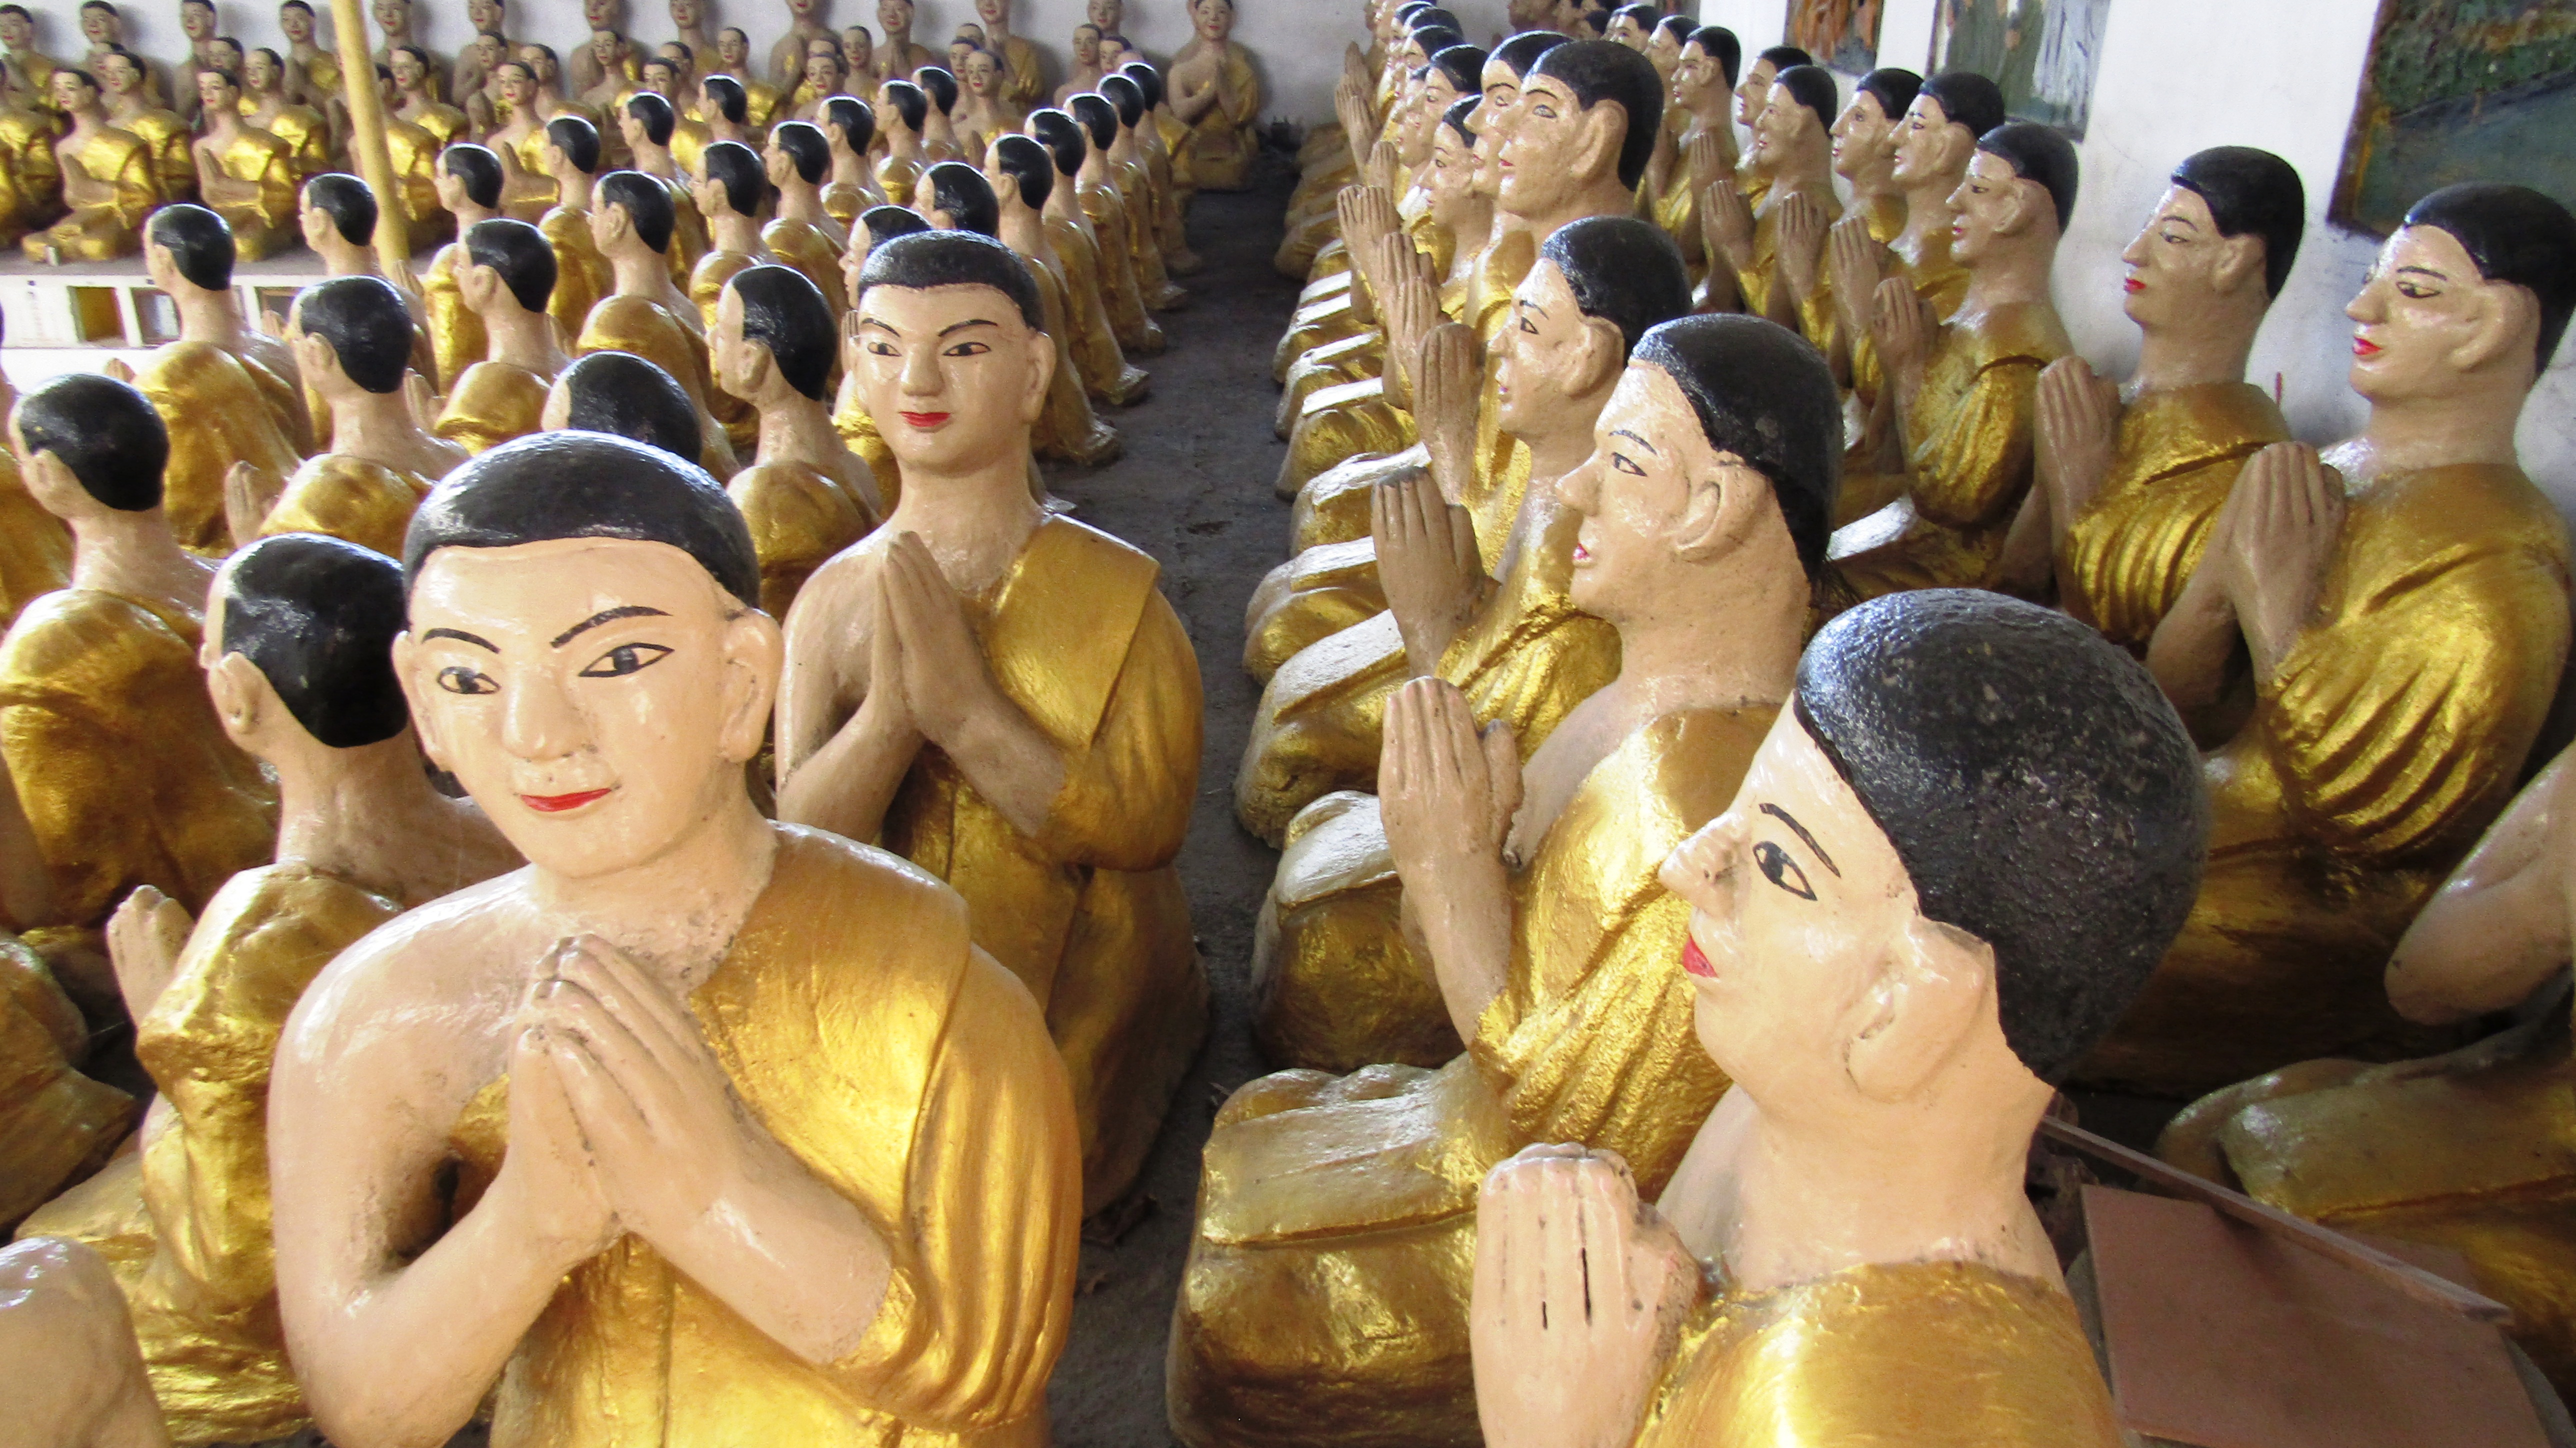 Monks in golden robes